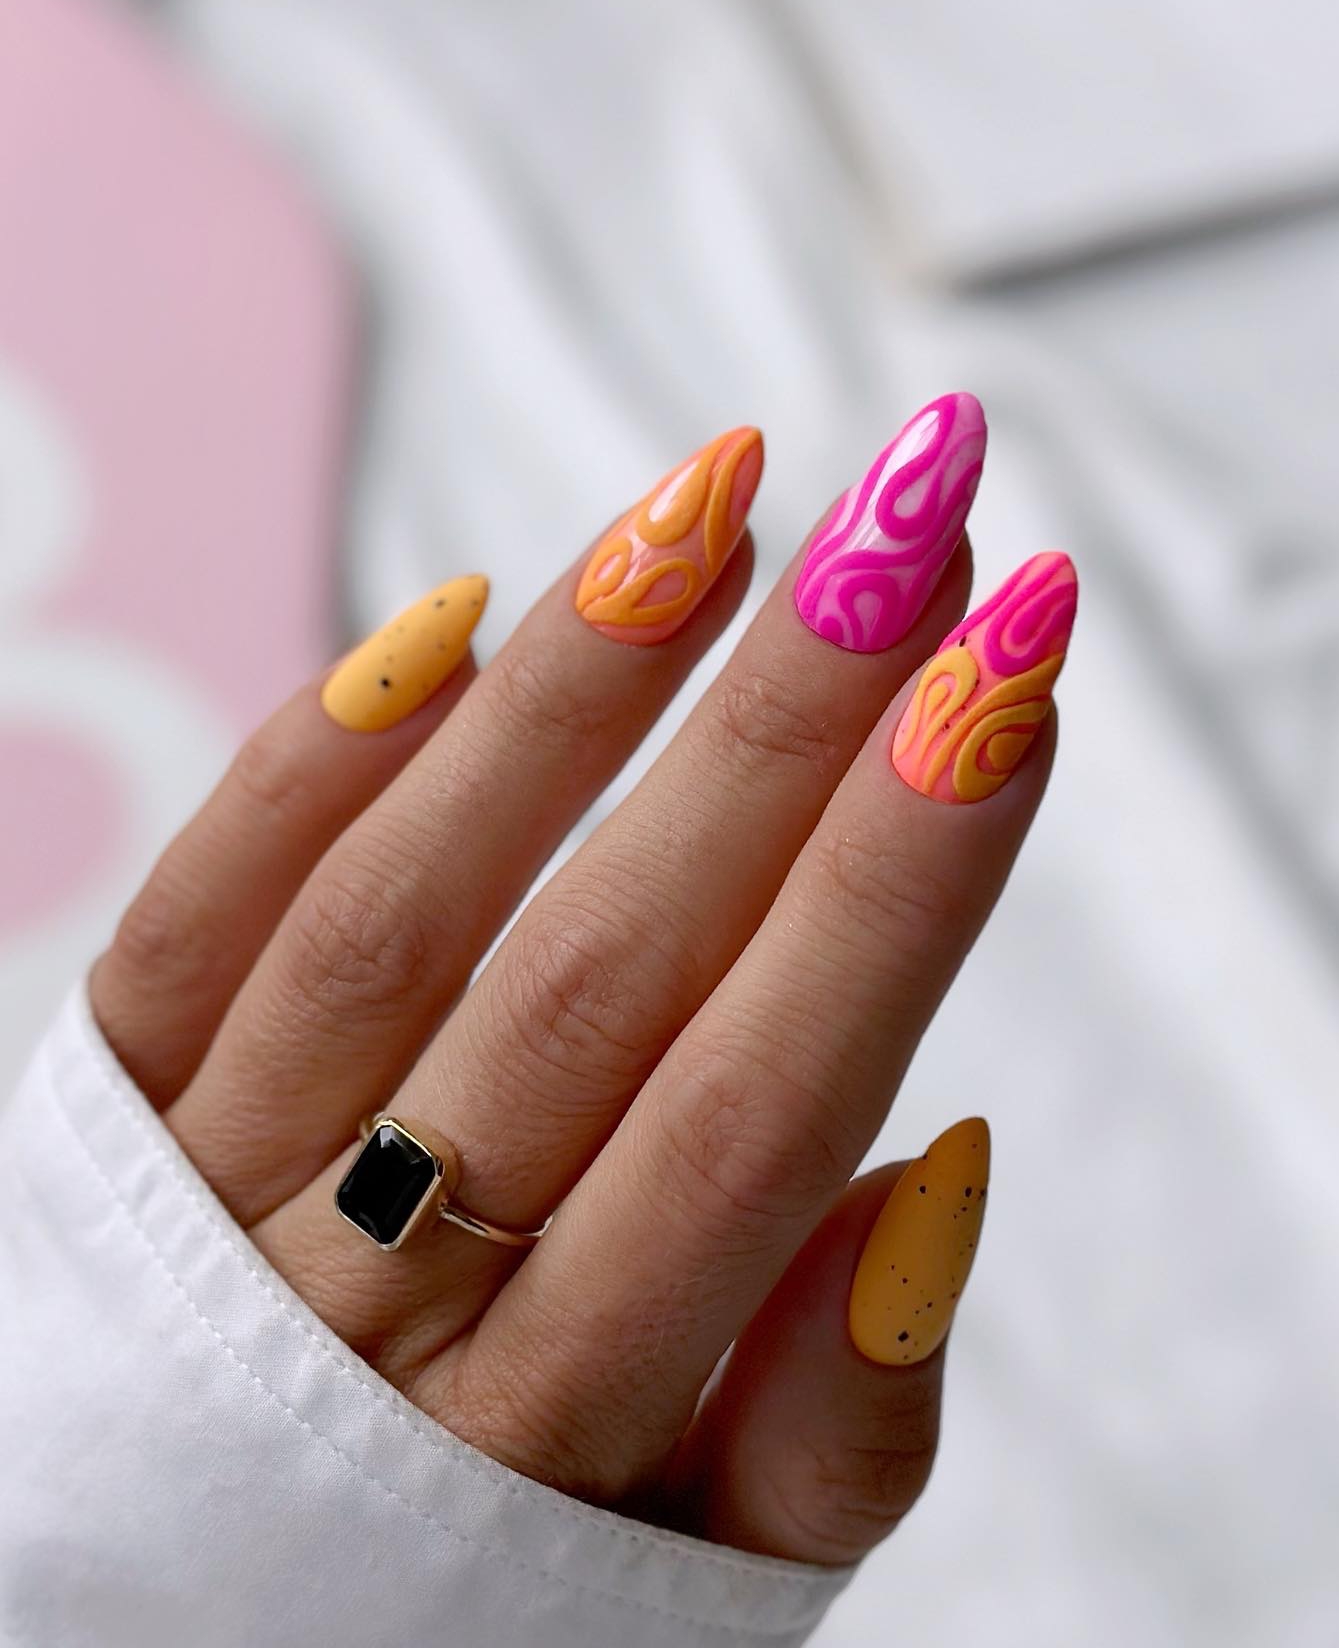 Pink and Orange Manicure with Swirl Design